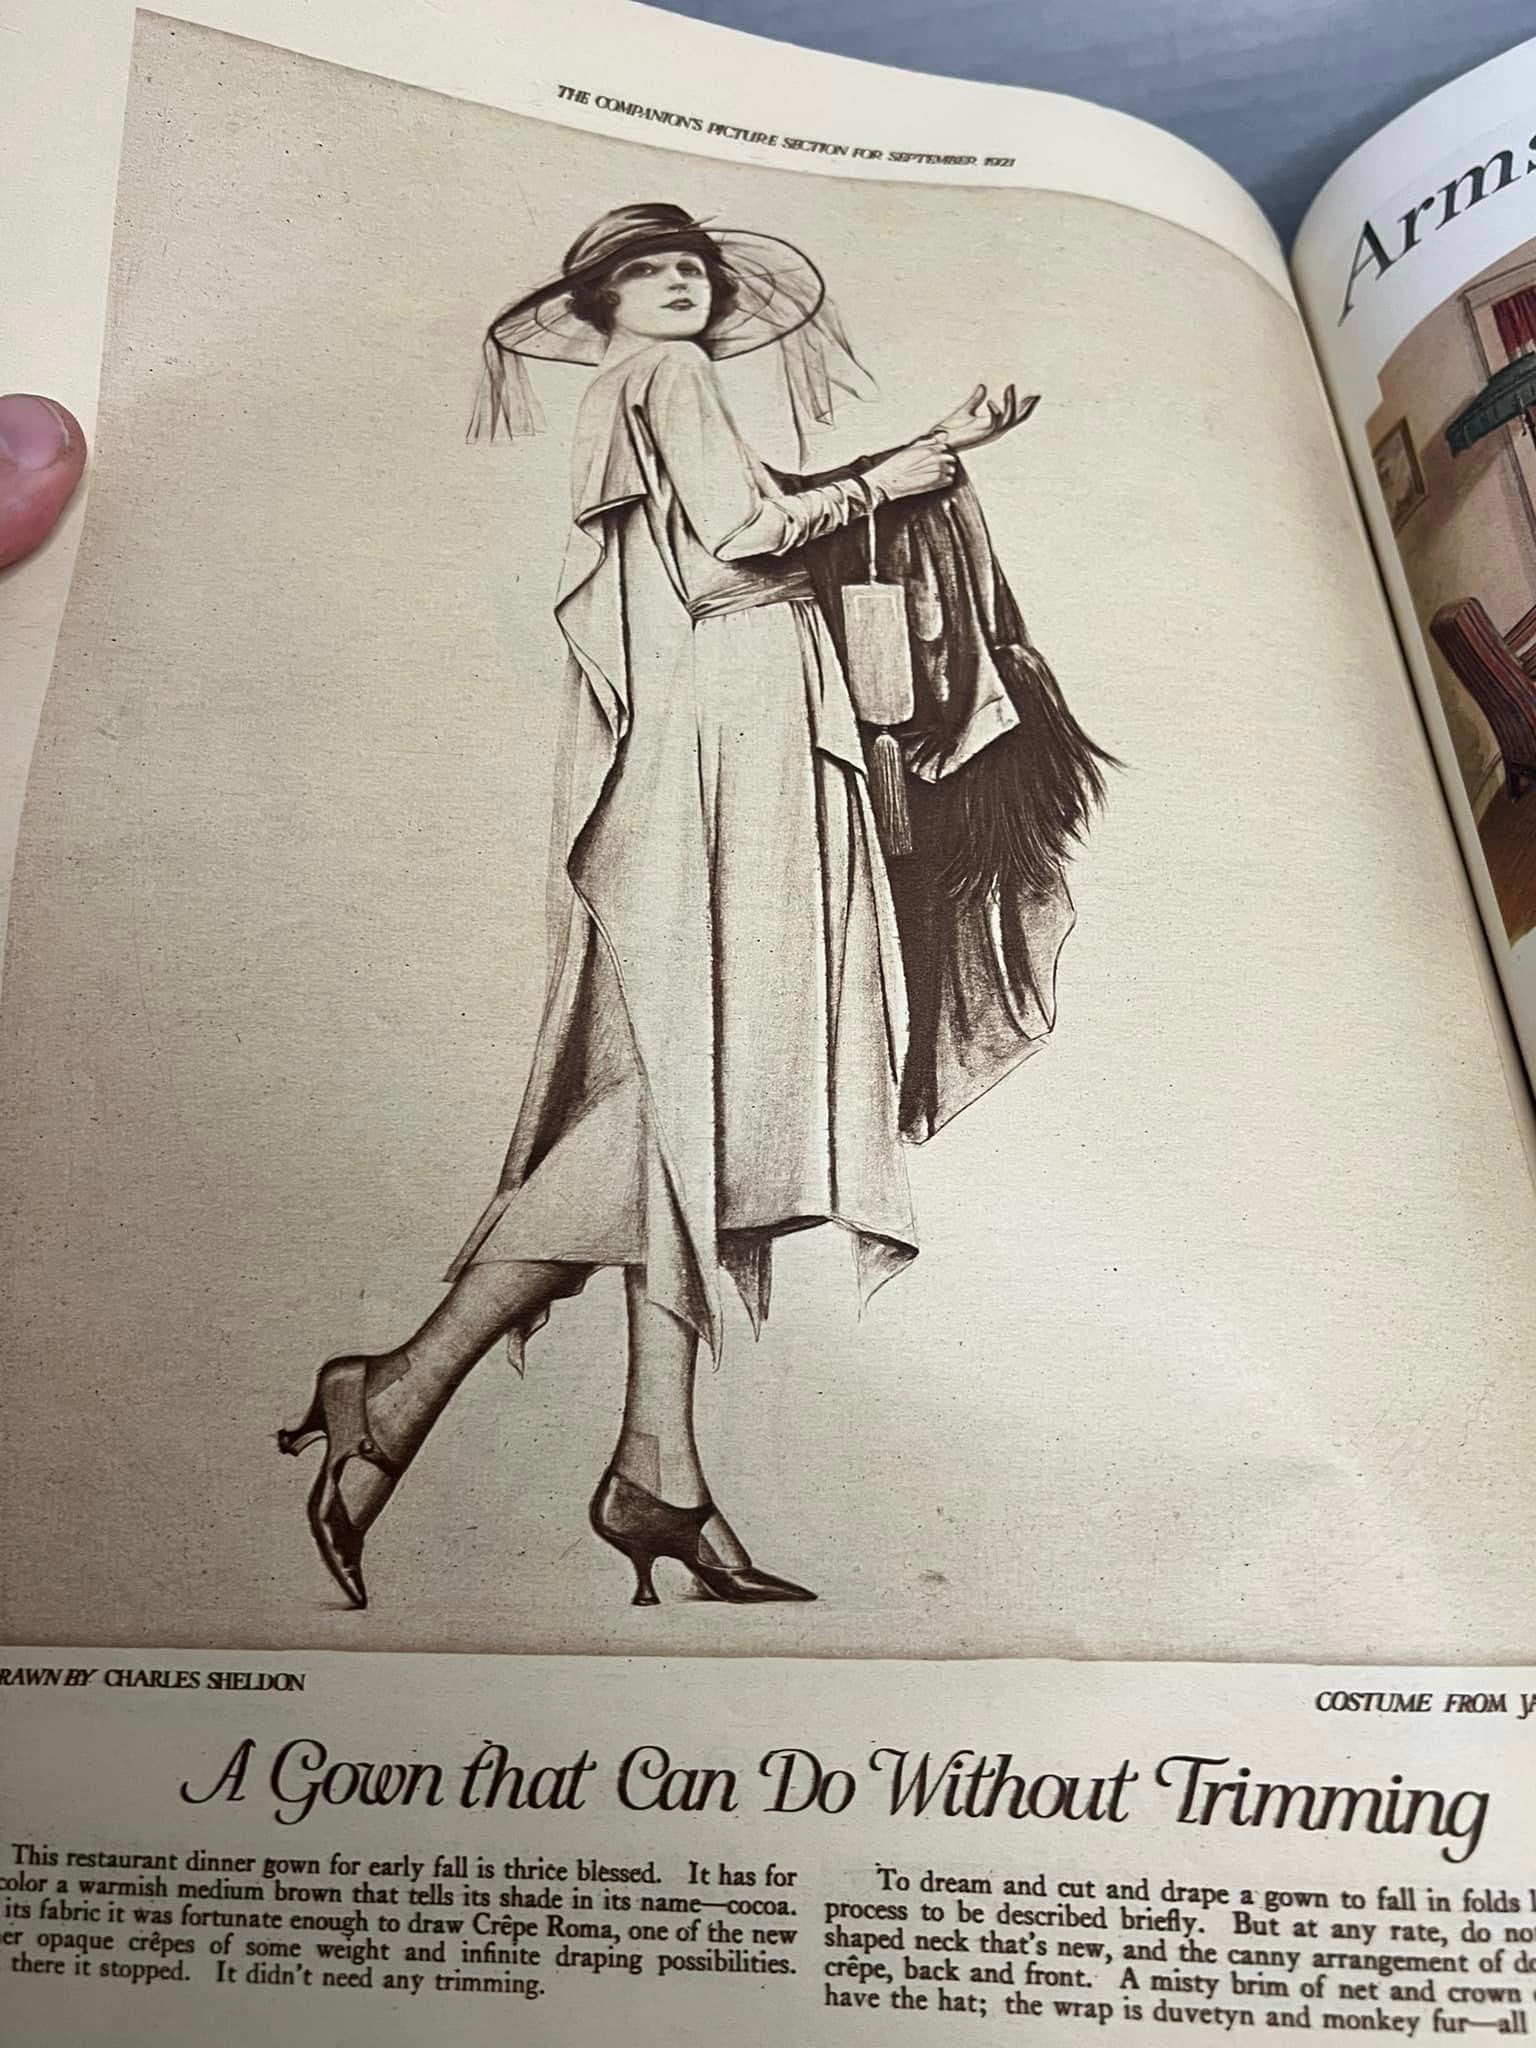 Antique Art deco women’s fashion 1921 Woman home companion Gorgeous cover magazine vintage advertising roaring 20s